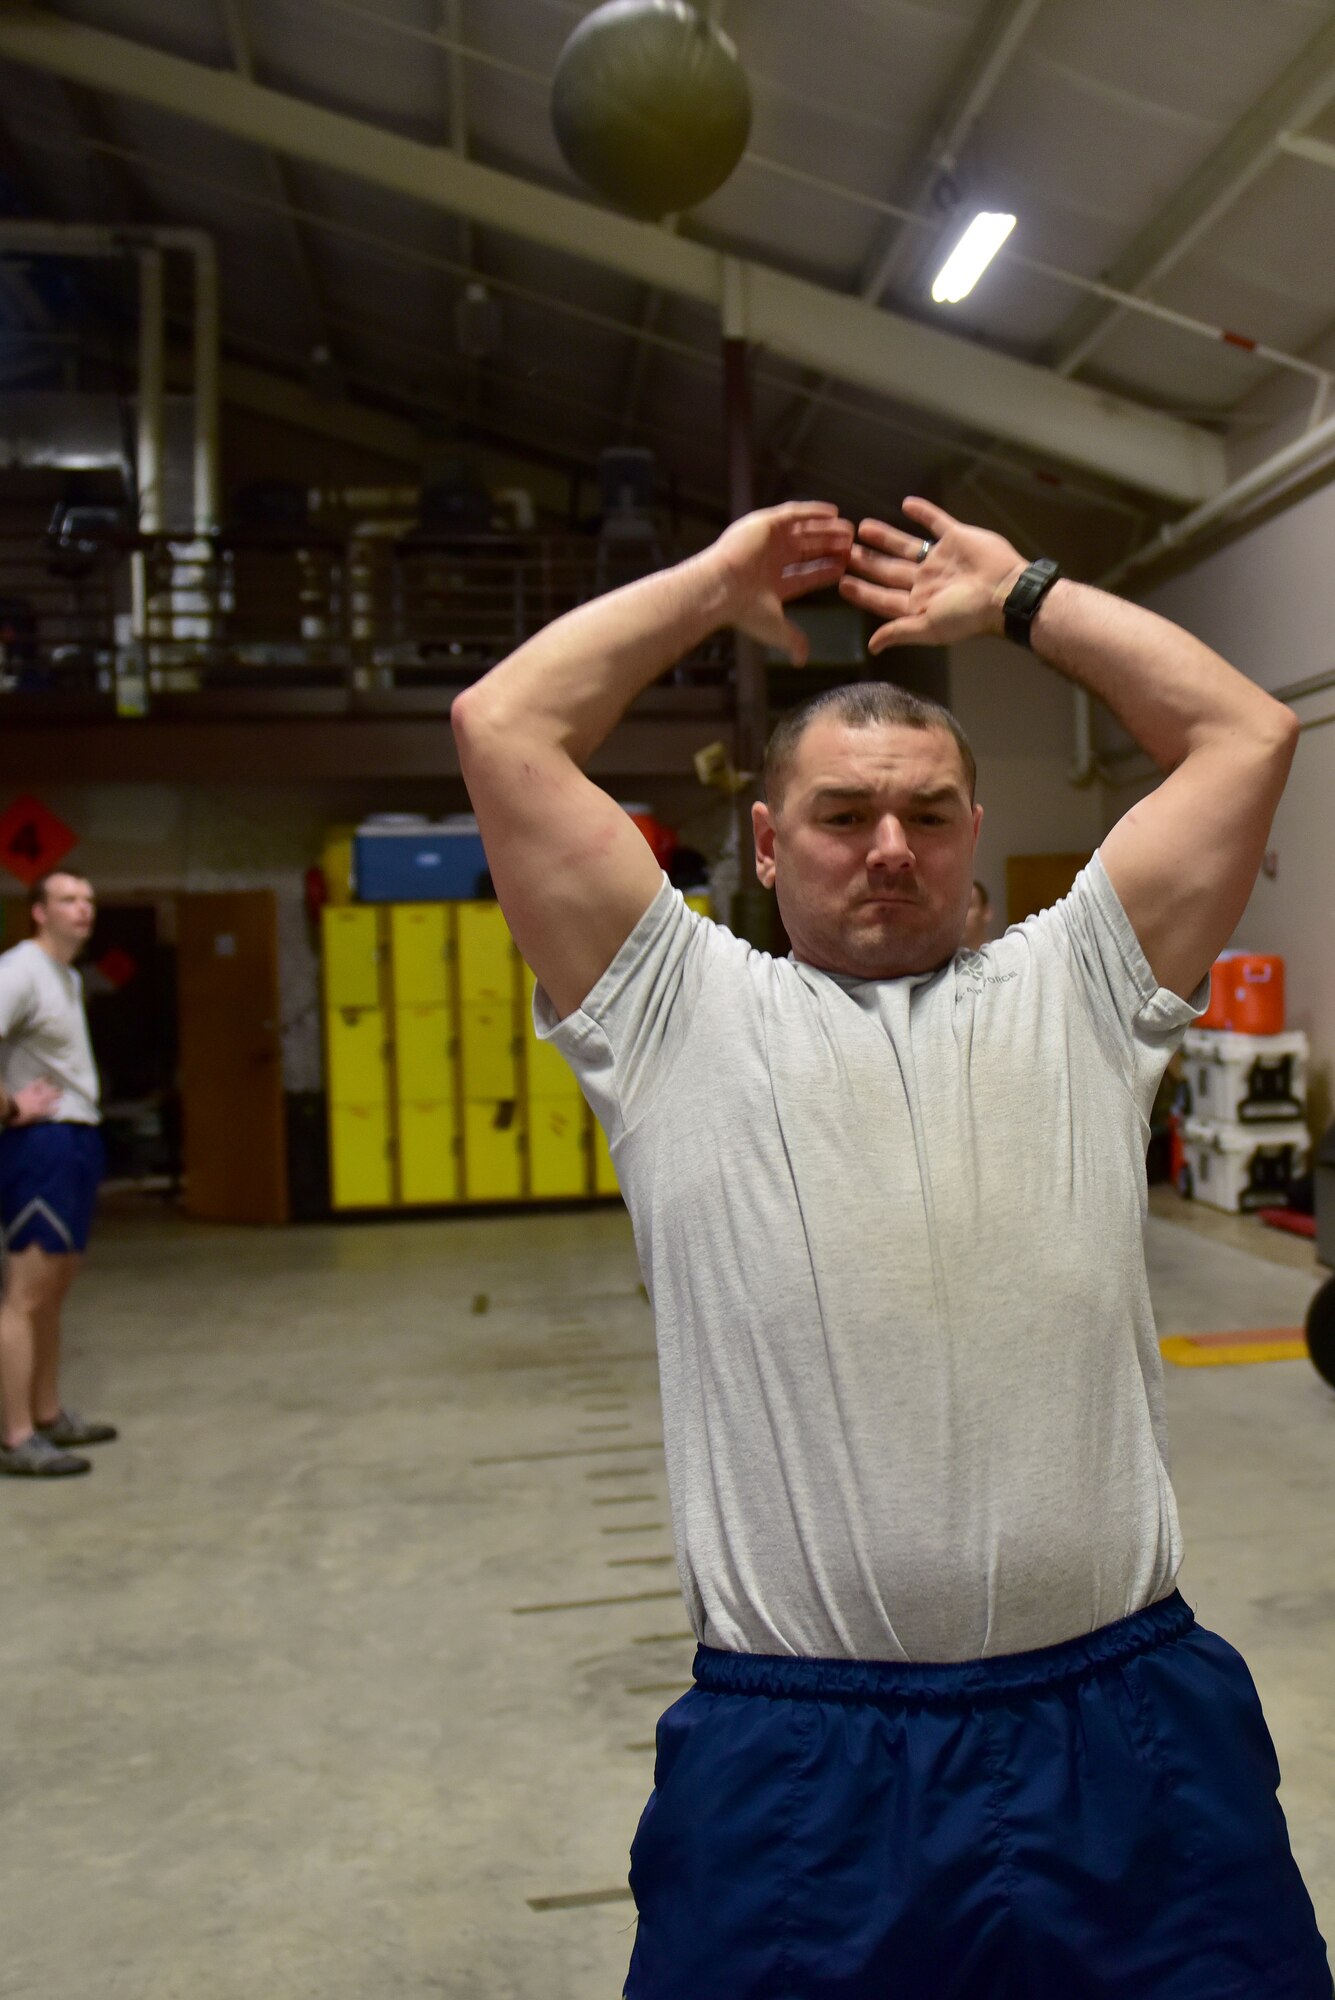 A man wearing the Air Force physical training gear throws a medicine ball.